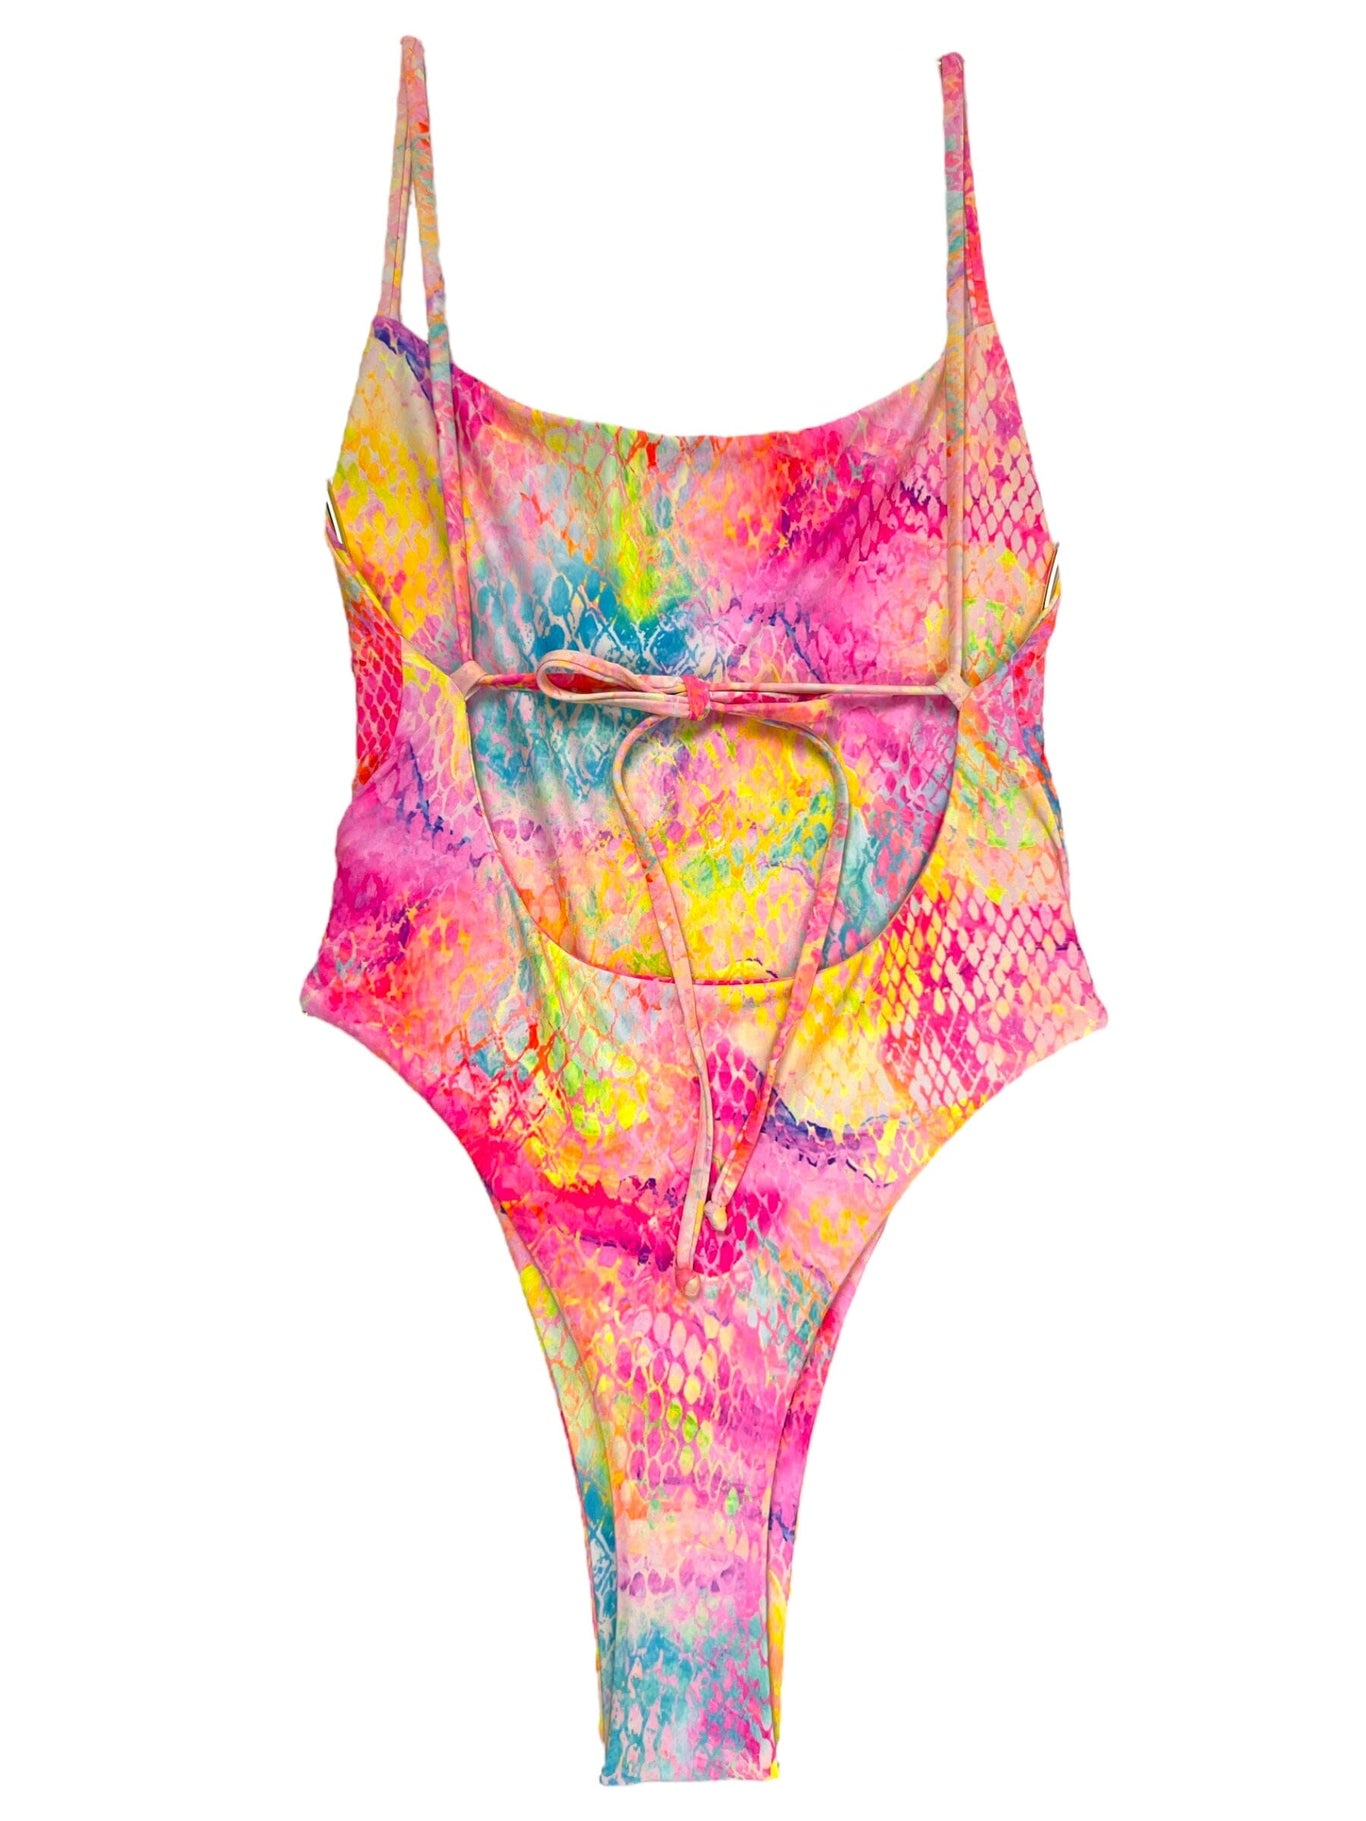 MYSTIQUE ONE PIECE - Berry Beachy Swimwear